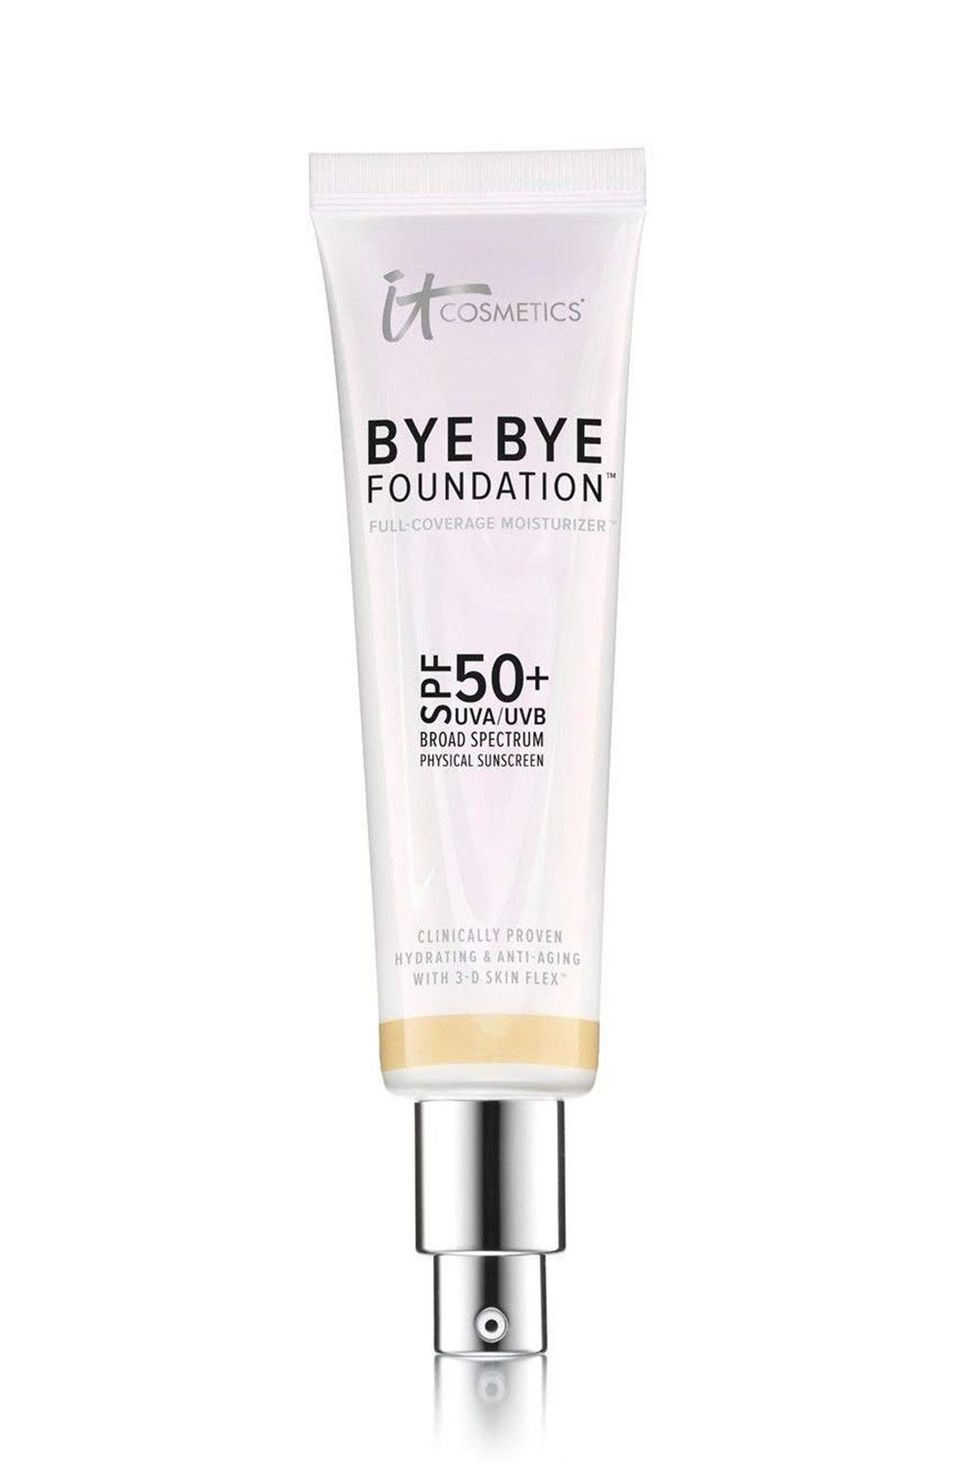 It Cosmetics Bye Bye Foundation with SPF 50+